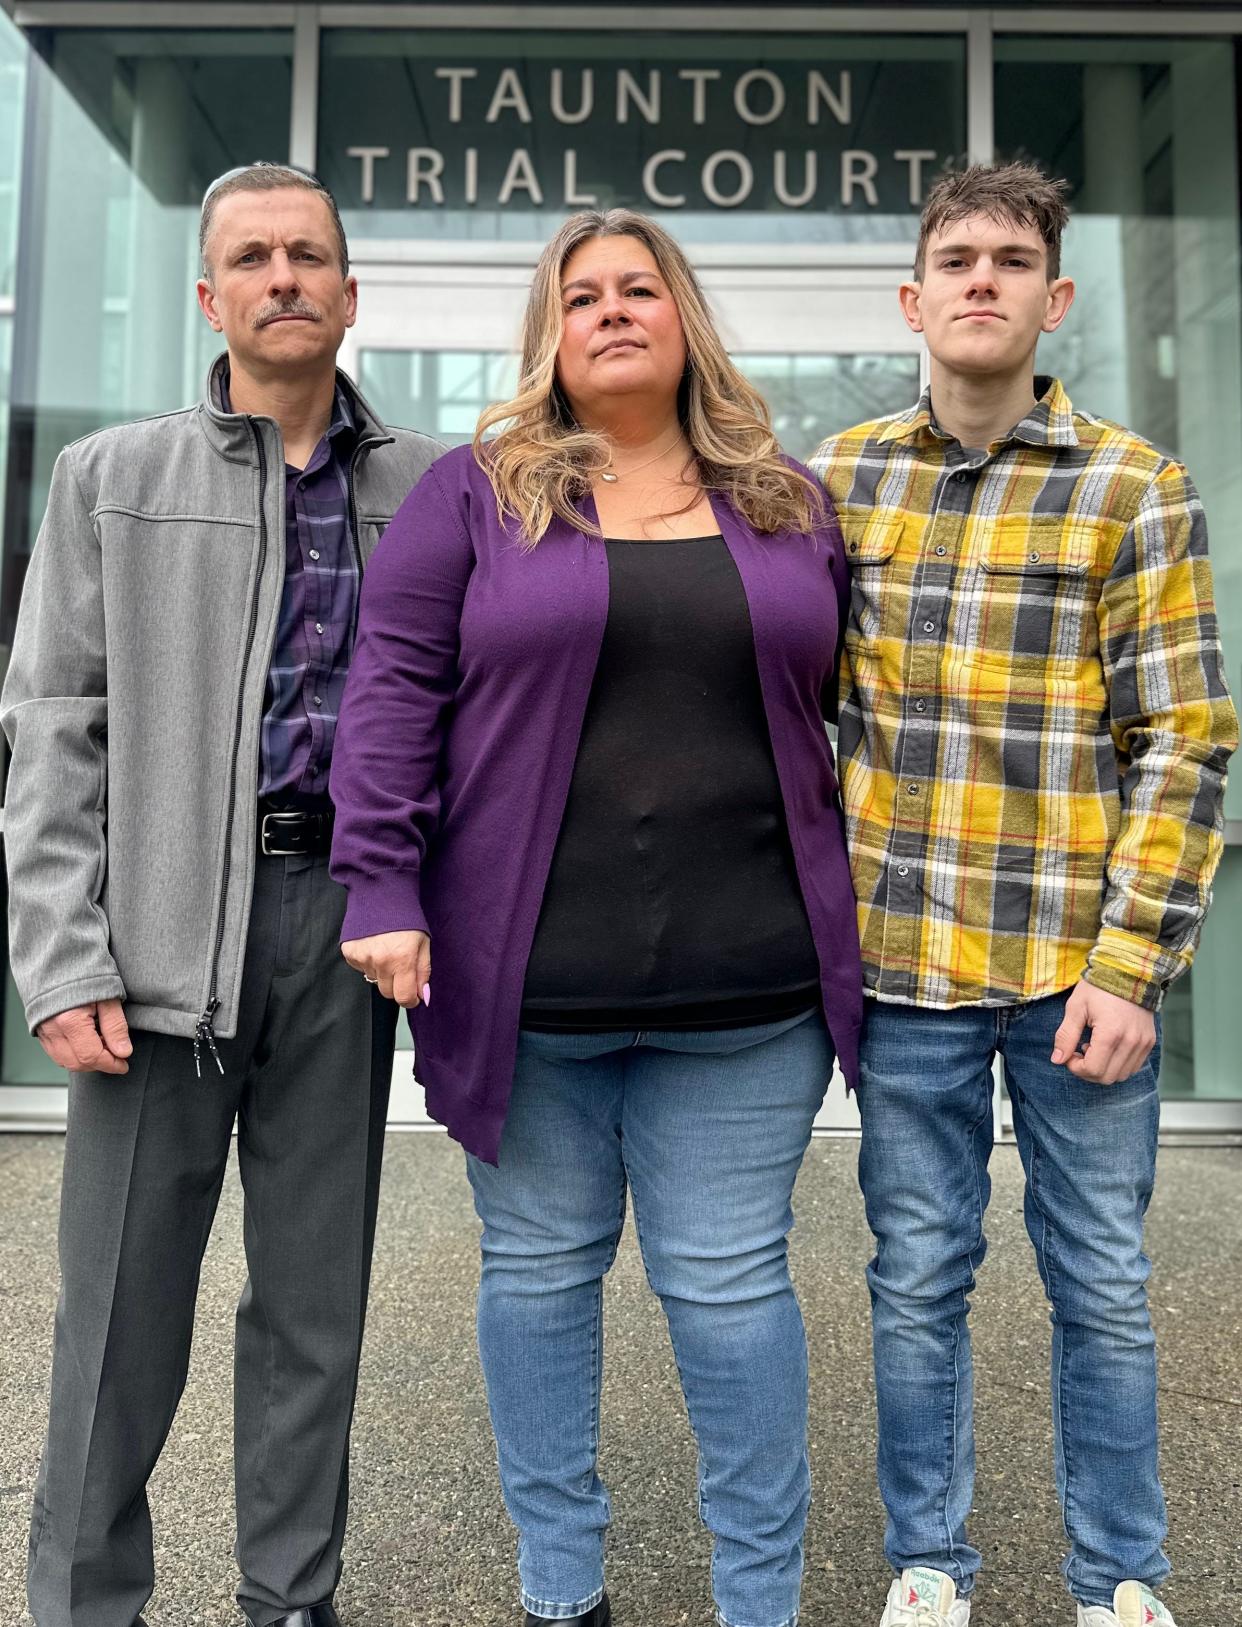 Daniel Carrier, Melanie Mott and their son, Dan, stand outside Taunton Trial Court in Massachusetts.